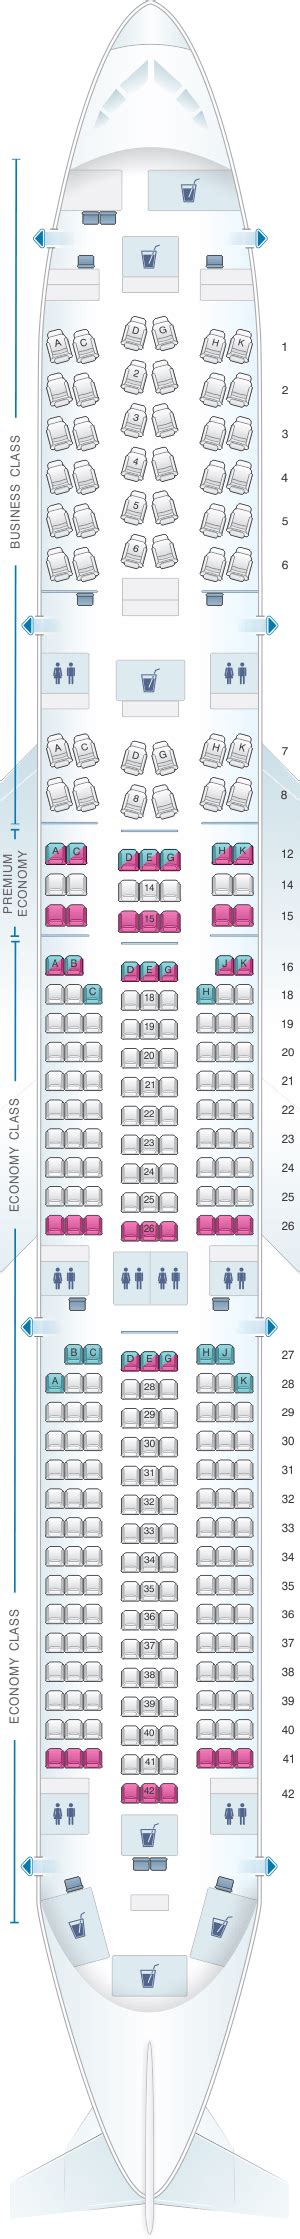 Lufthansa Seat Selection Map Cabinets Matttroy